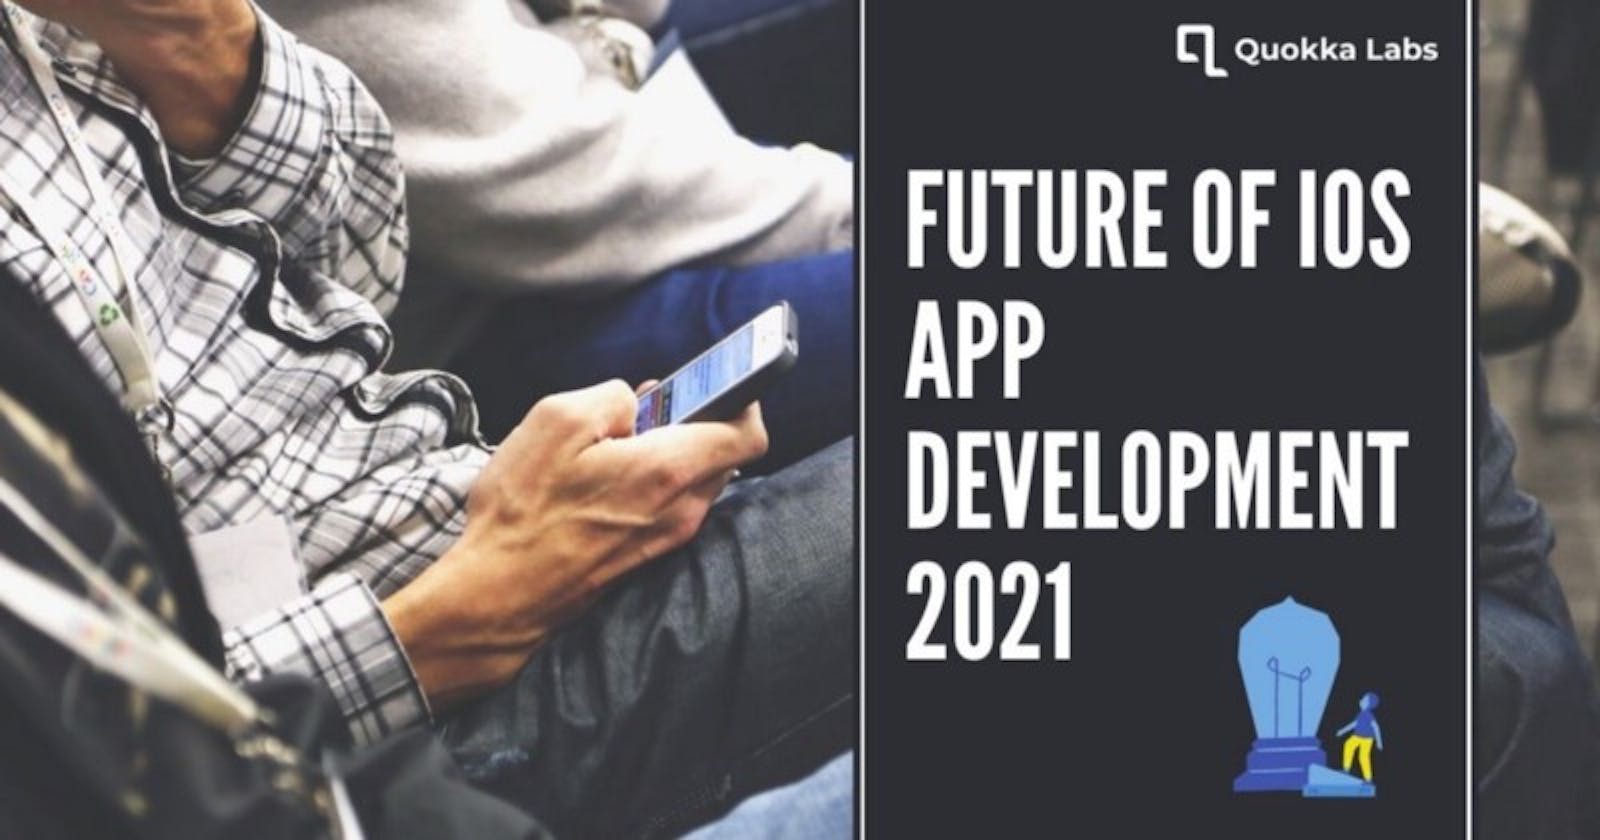 Future of iOS App Development 2021